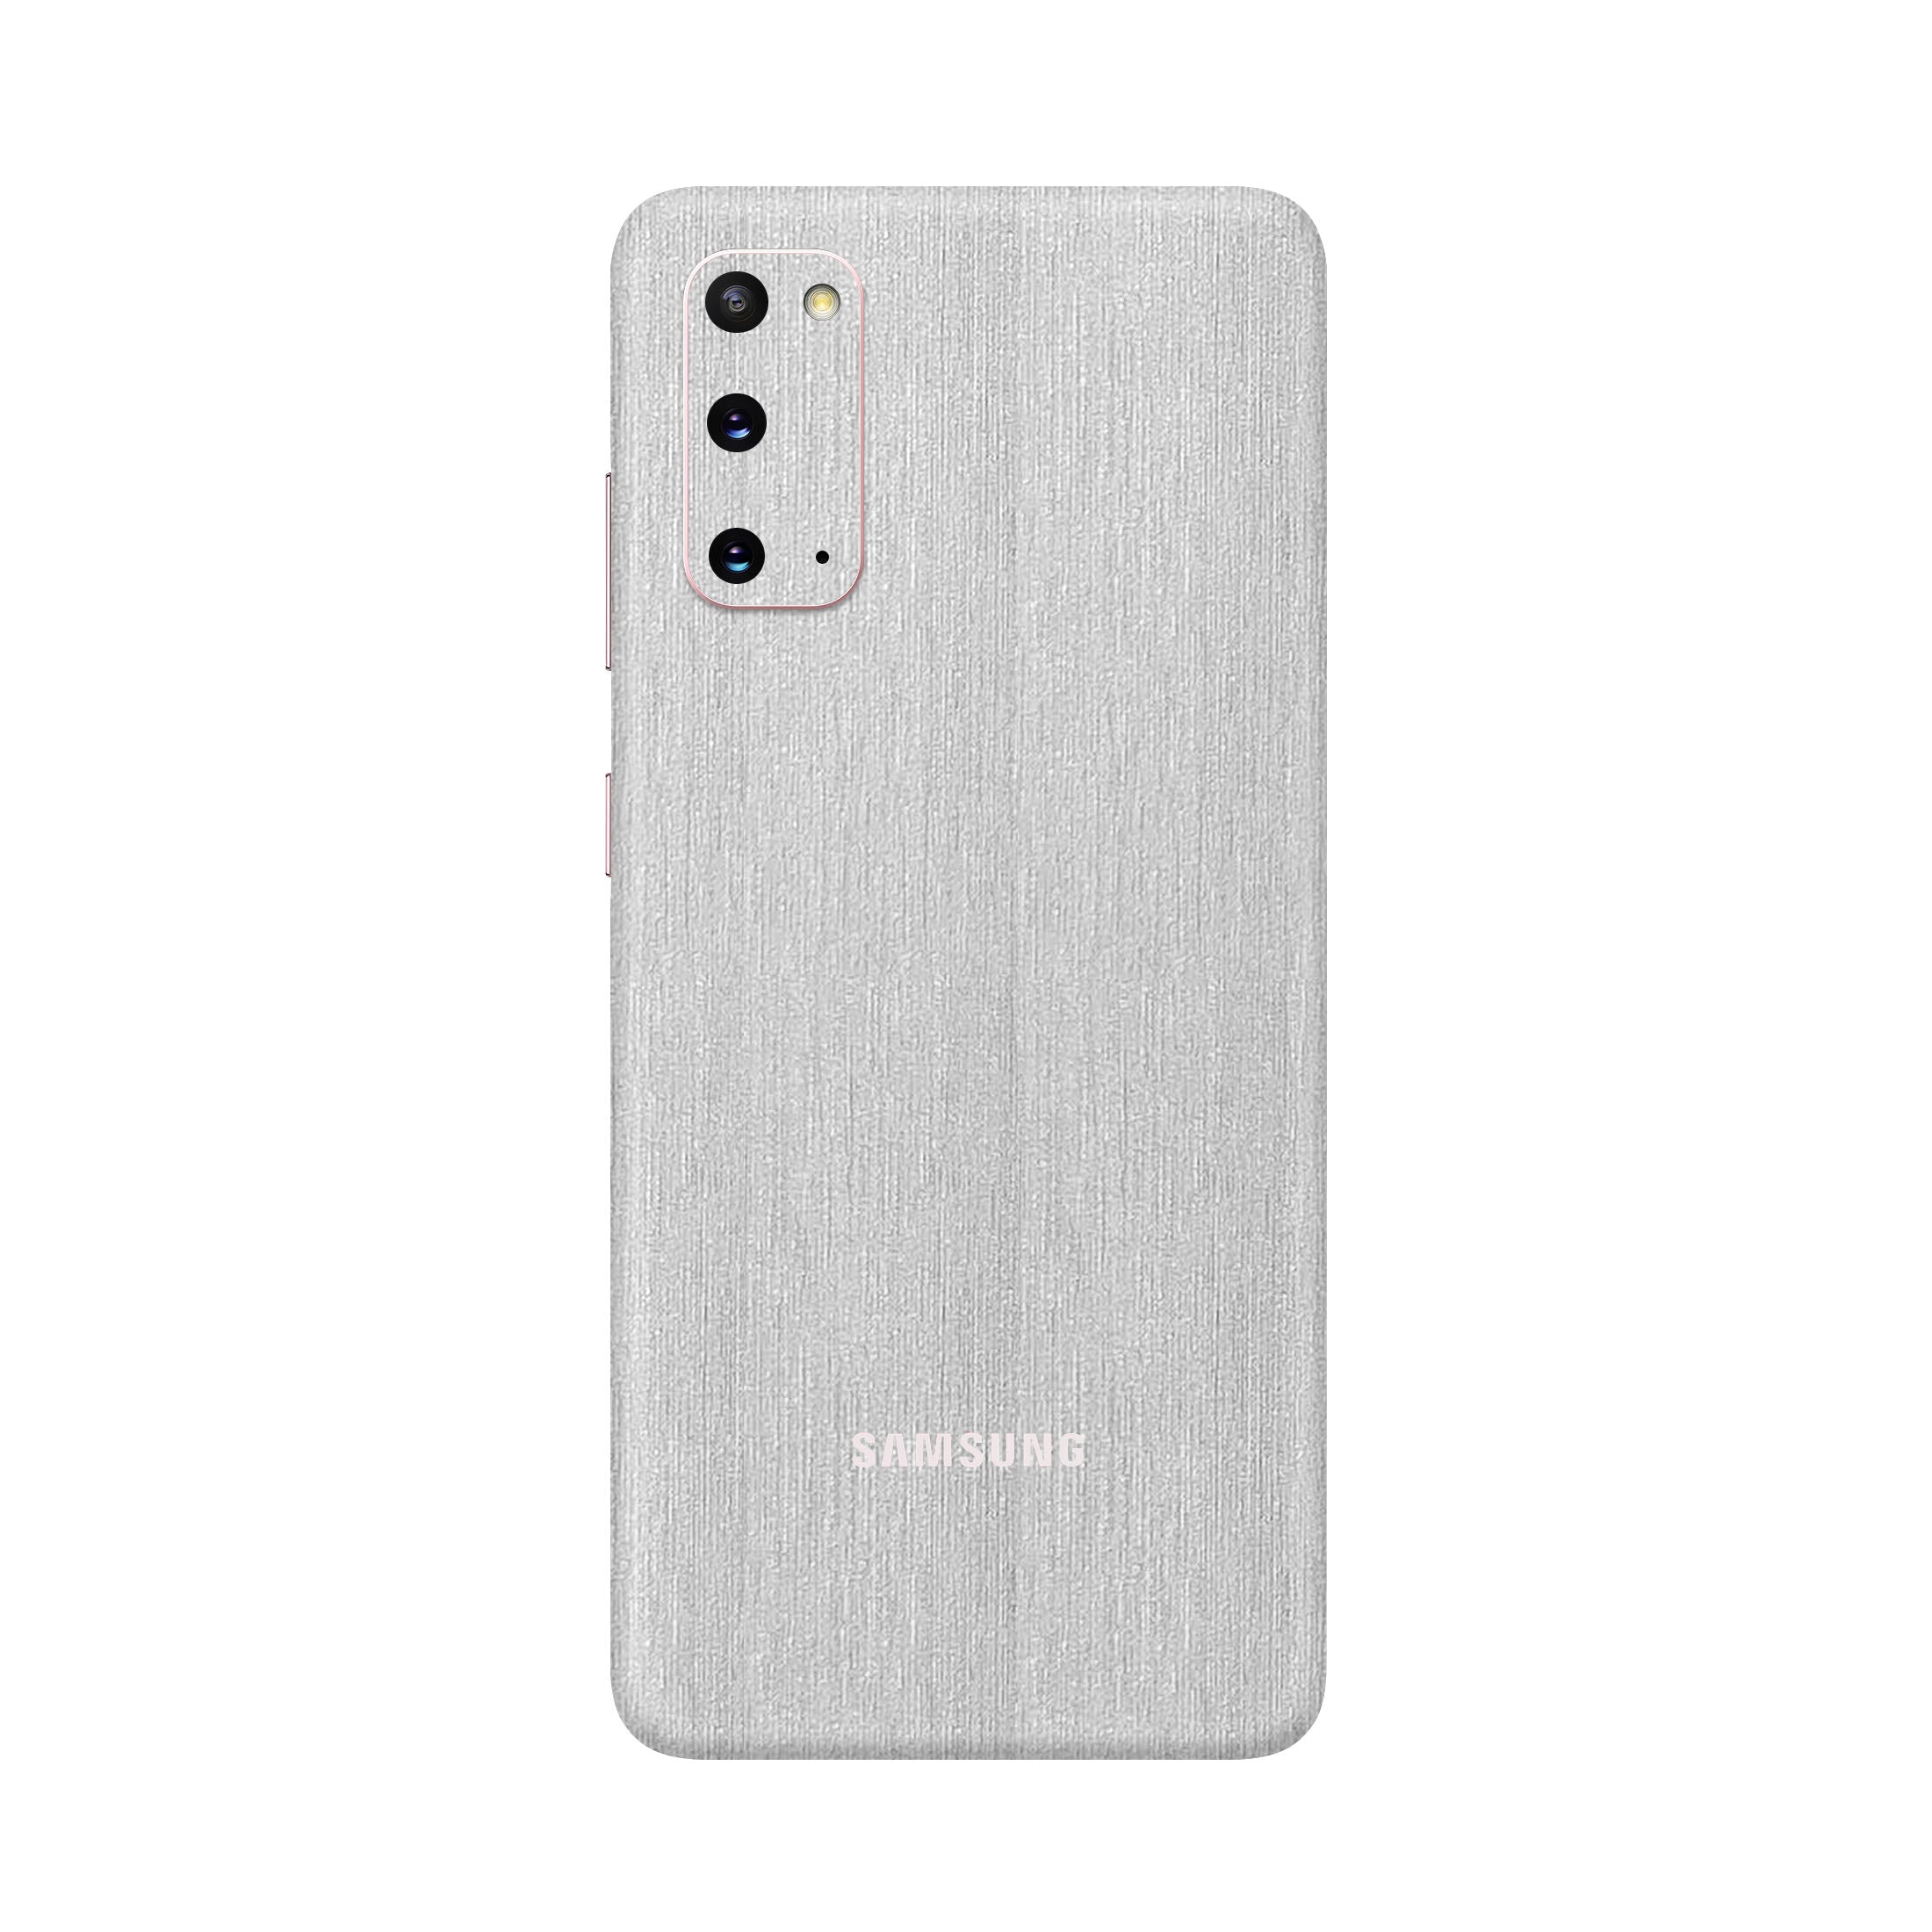 Brushed Aluminum Skin for Samsung S20